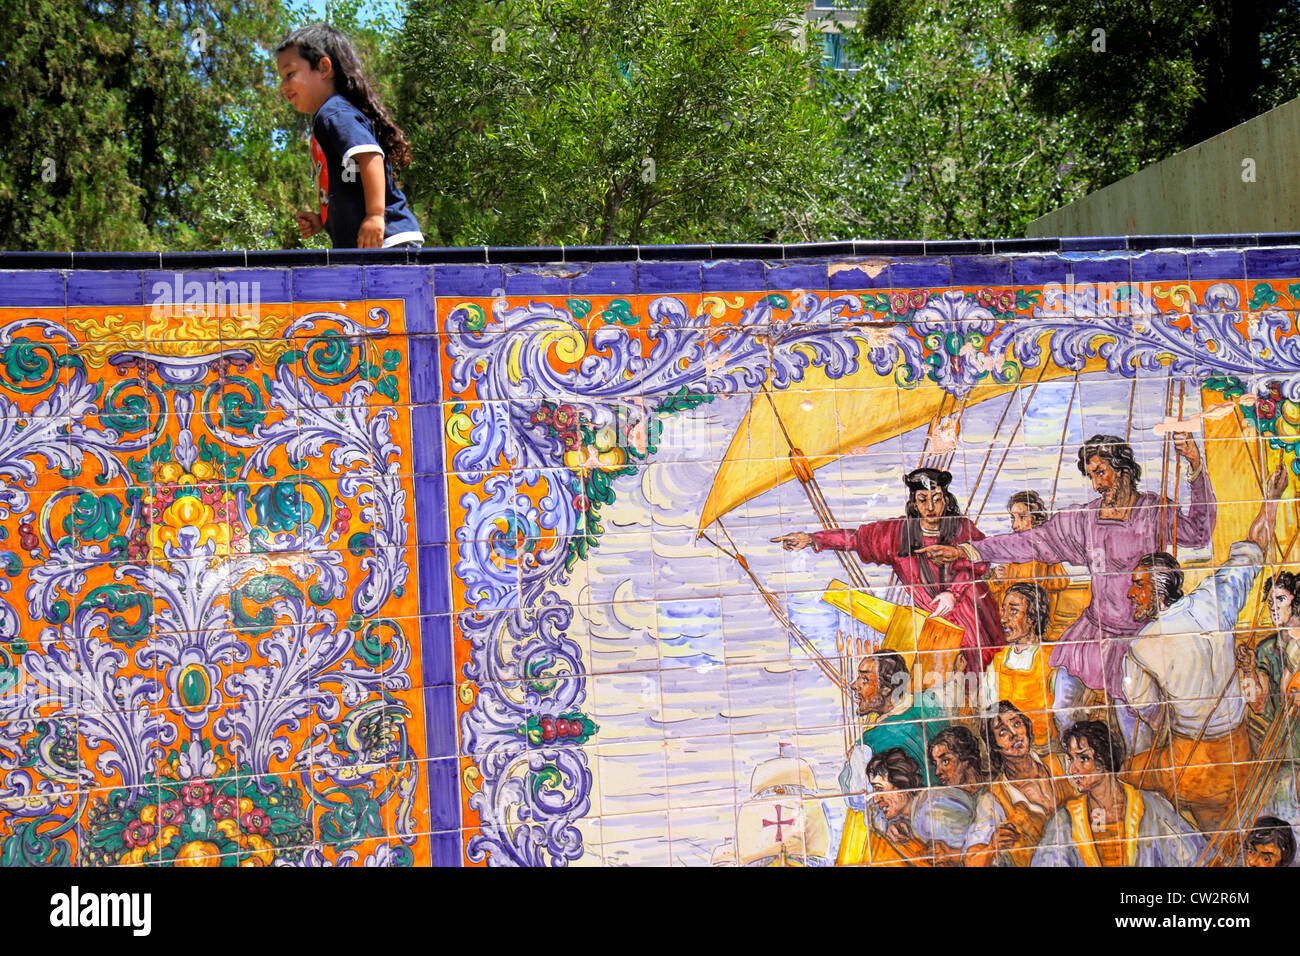 Mendoza Argentina,Plaza Espana,Spanish Fraternity Monument,Majolica tile mosaic,Spanish conquest,Hispanic Latin Latino ethnic immigrant immigrants min Stock Photo